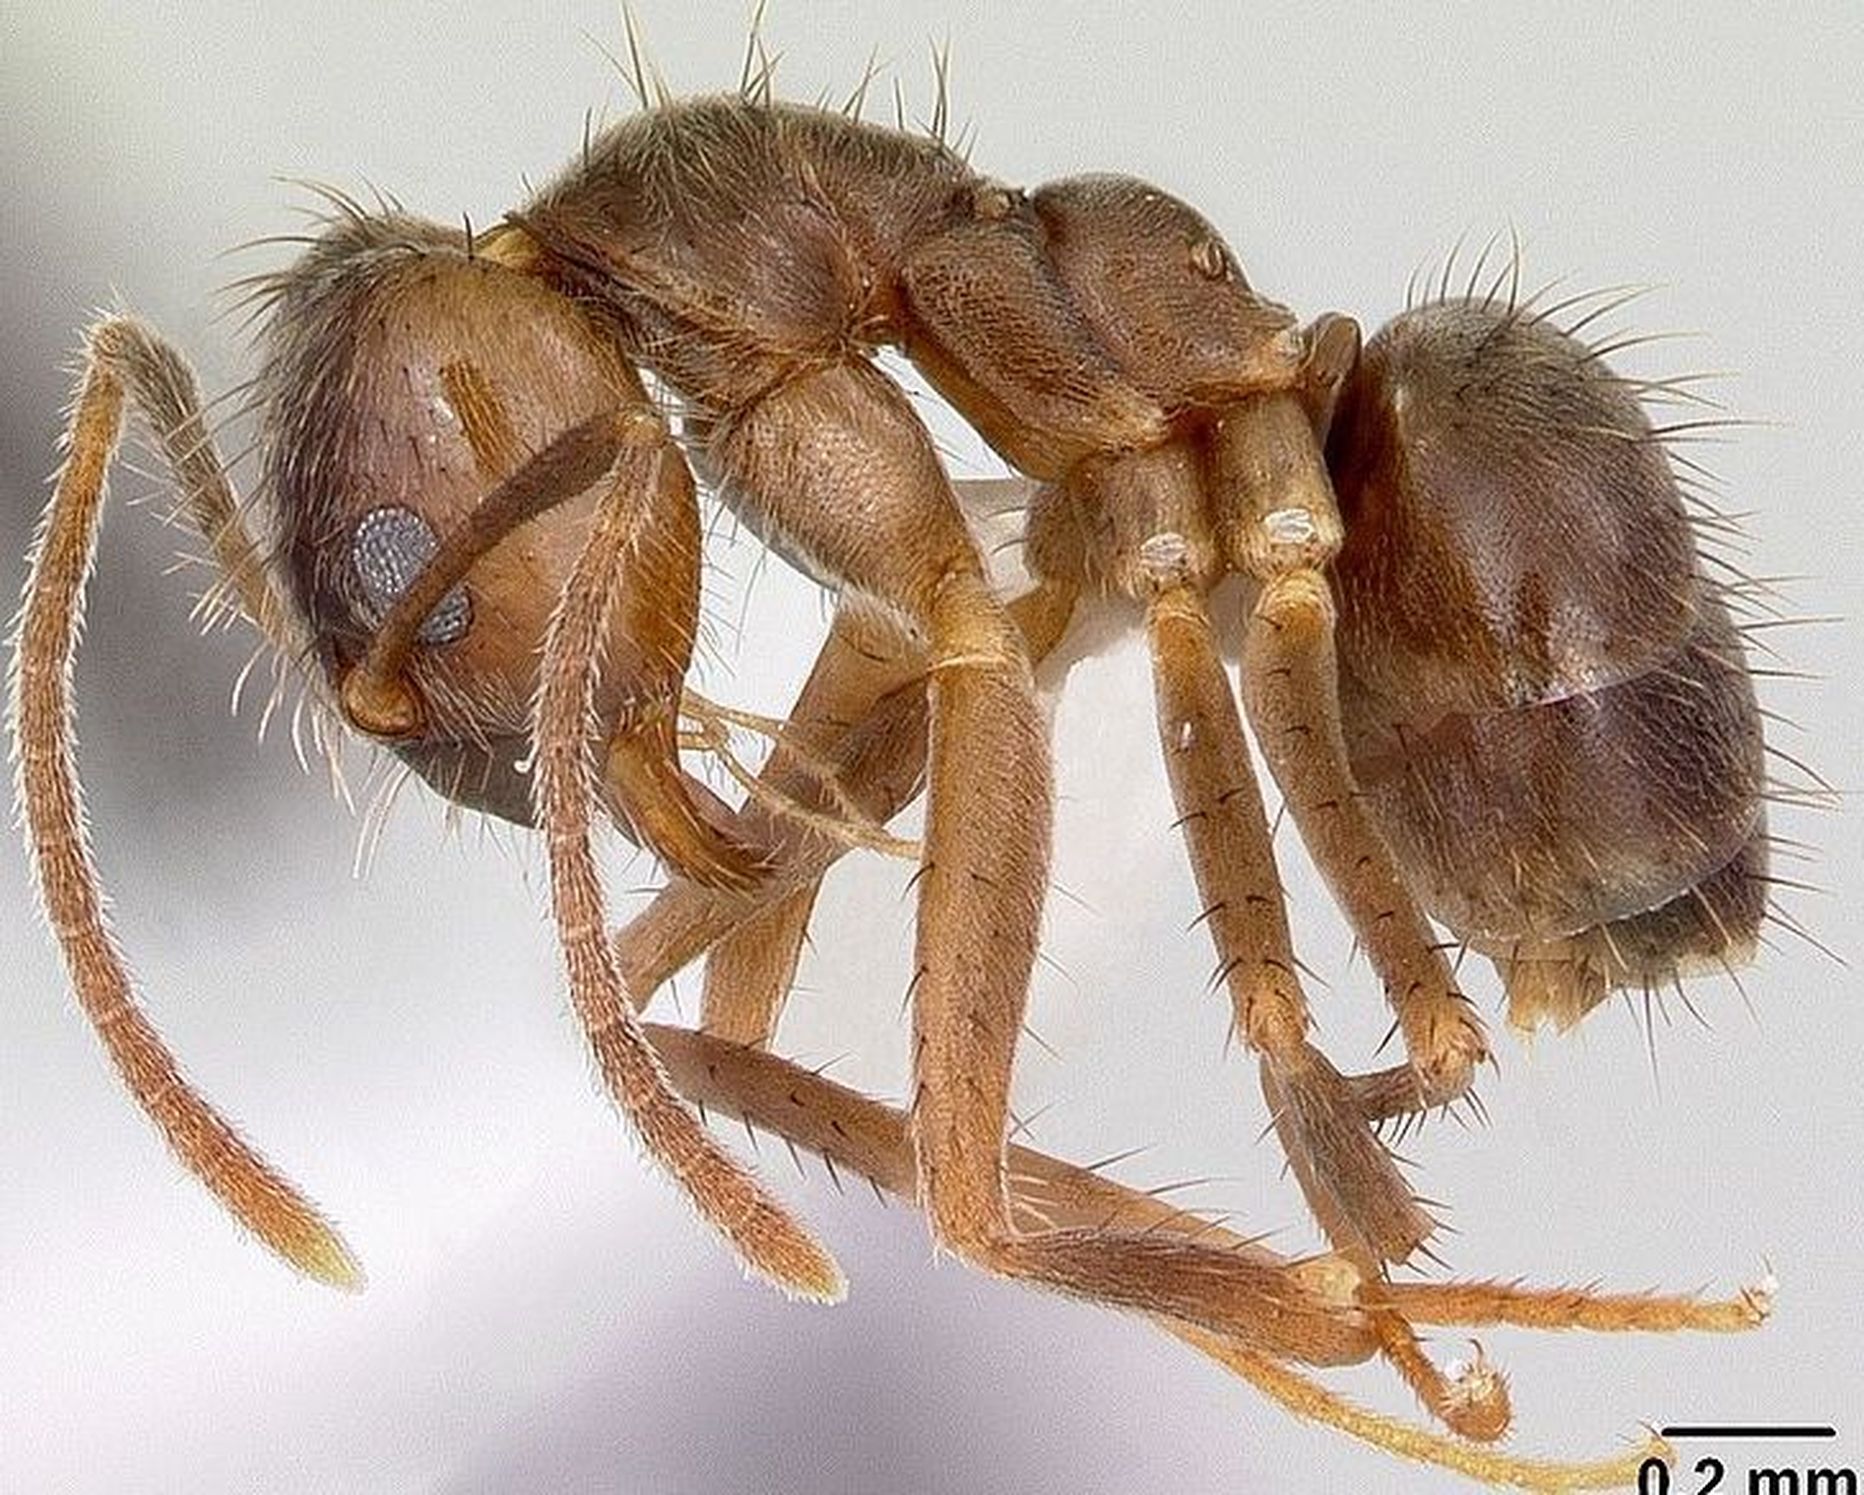 Nylanderia pubens sipelgas